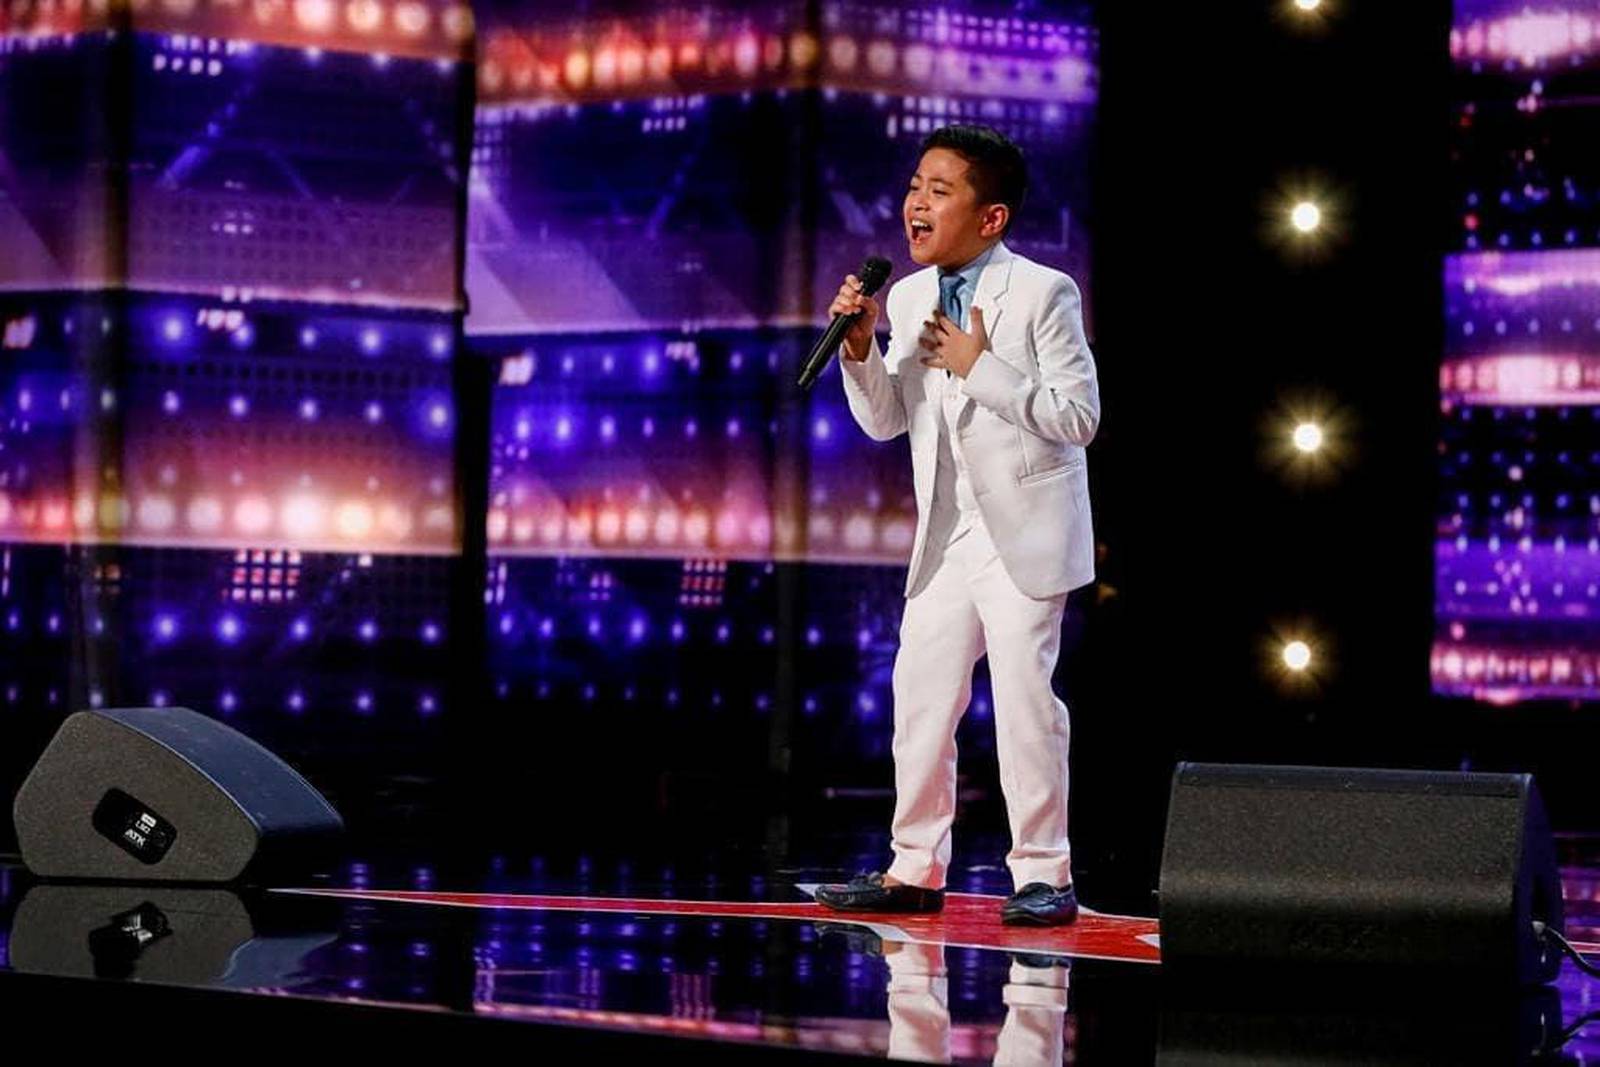 Peter Rosalita sails through to 'America's Got Talent' semifinals 'I